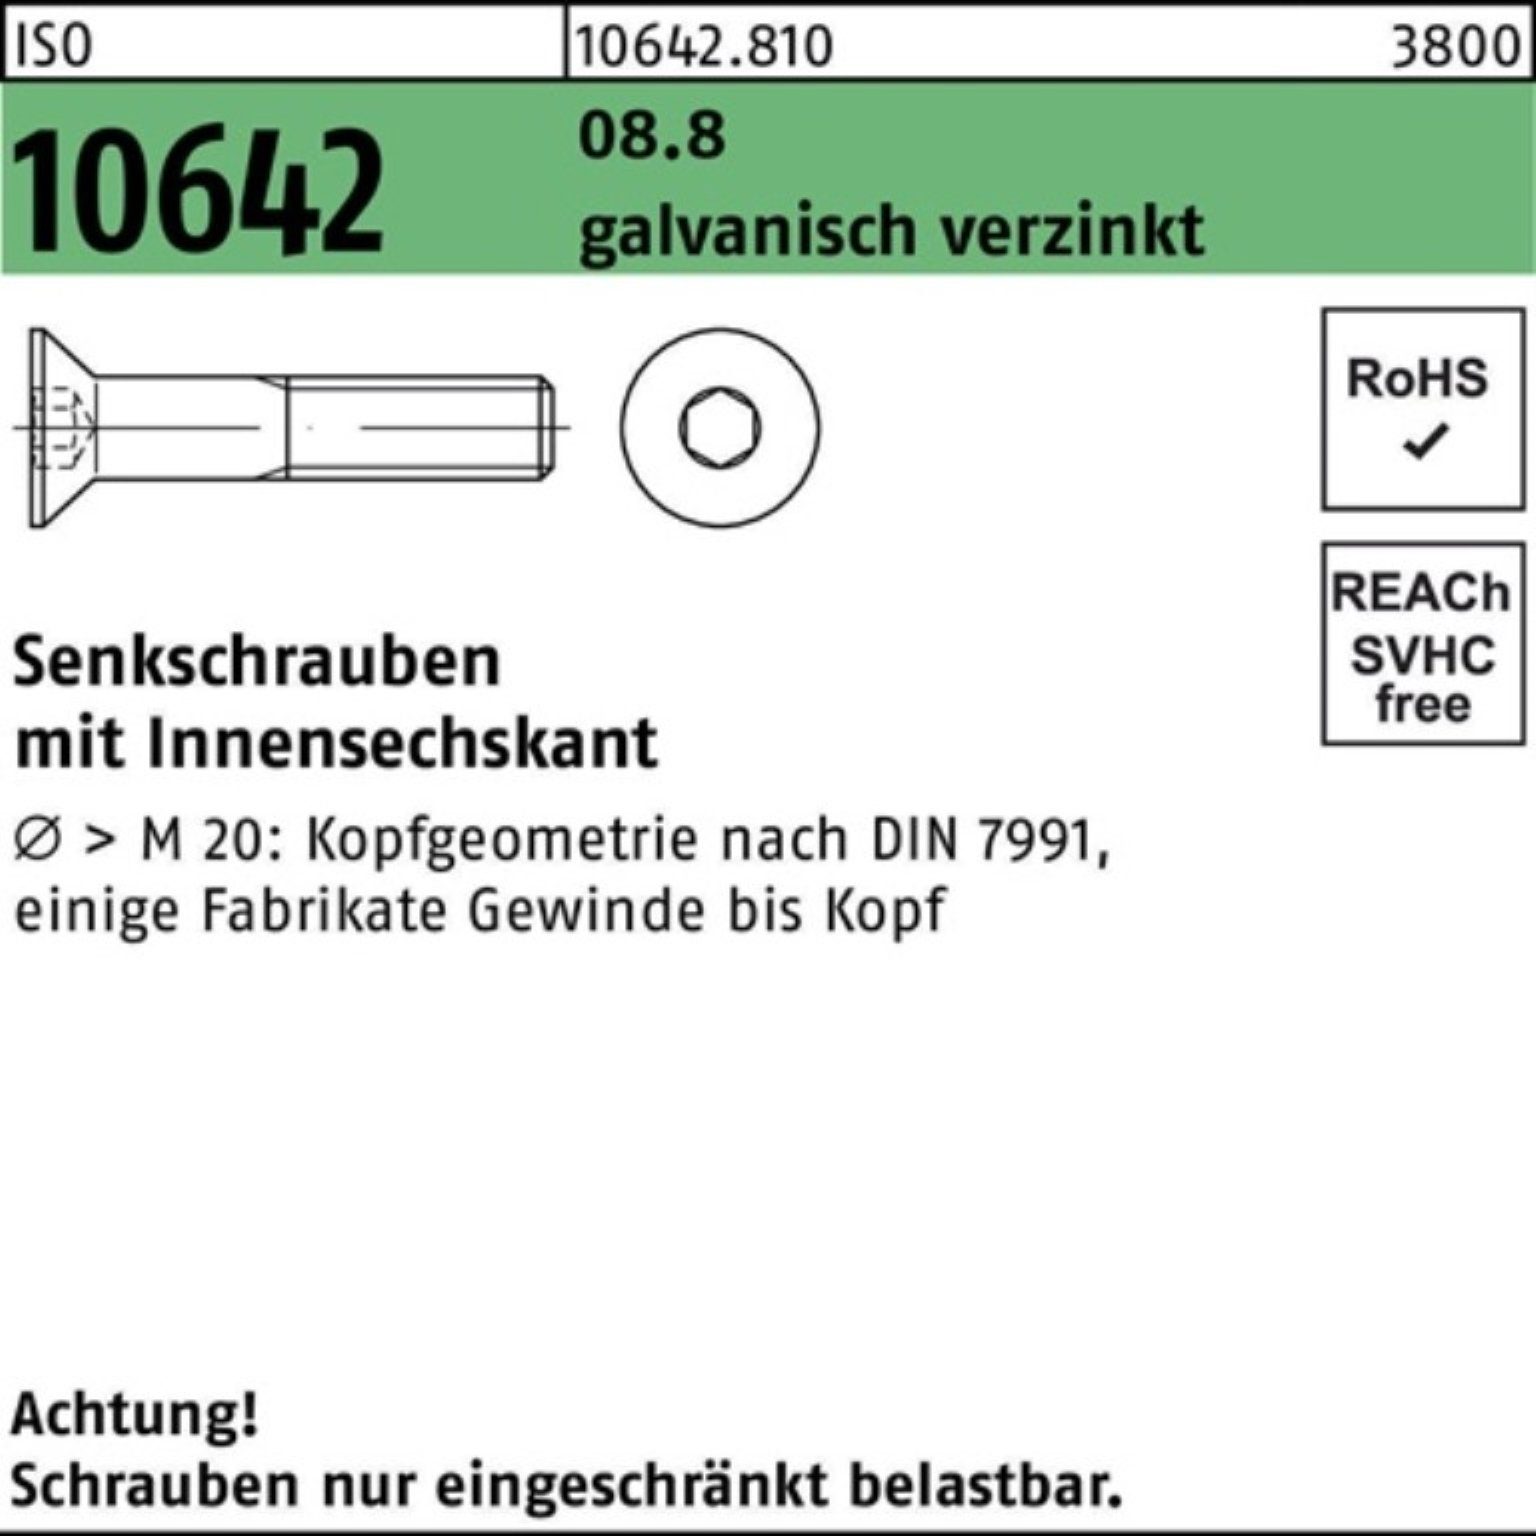 M5x 10642 S Reyher Senkschraube Pack 500er 8.8 ISO galv.verz. 500 Senkschraube 8 Innen-6kt